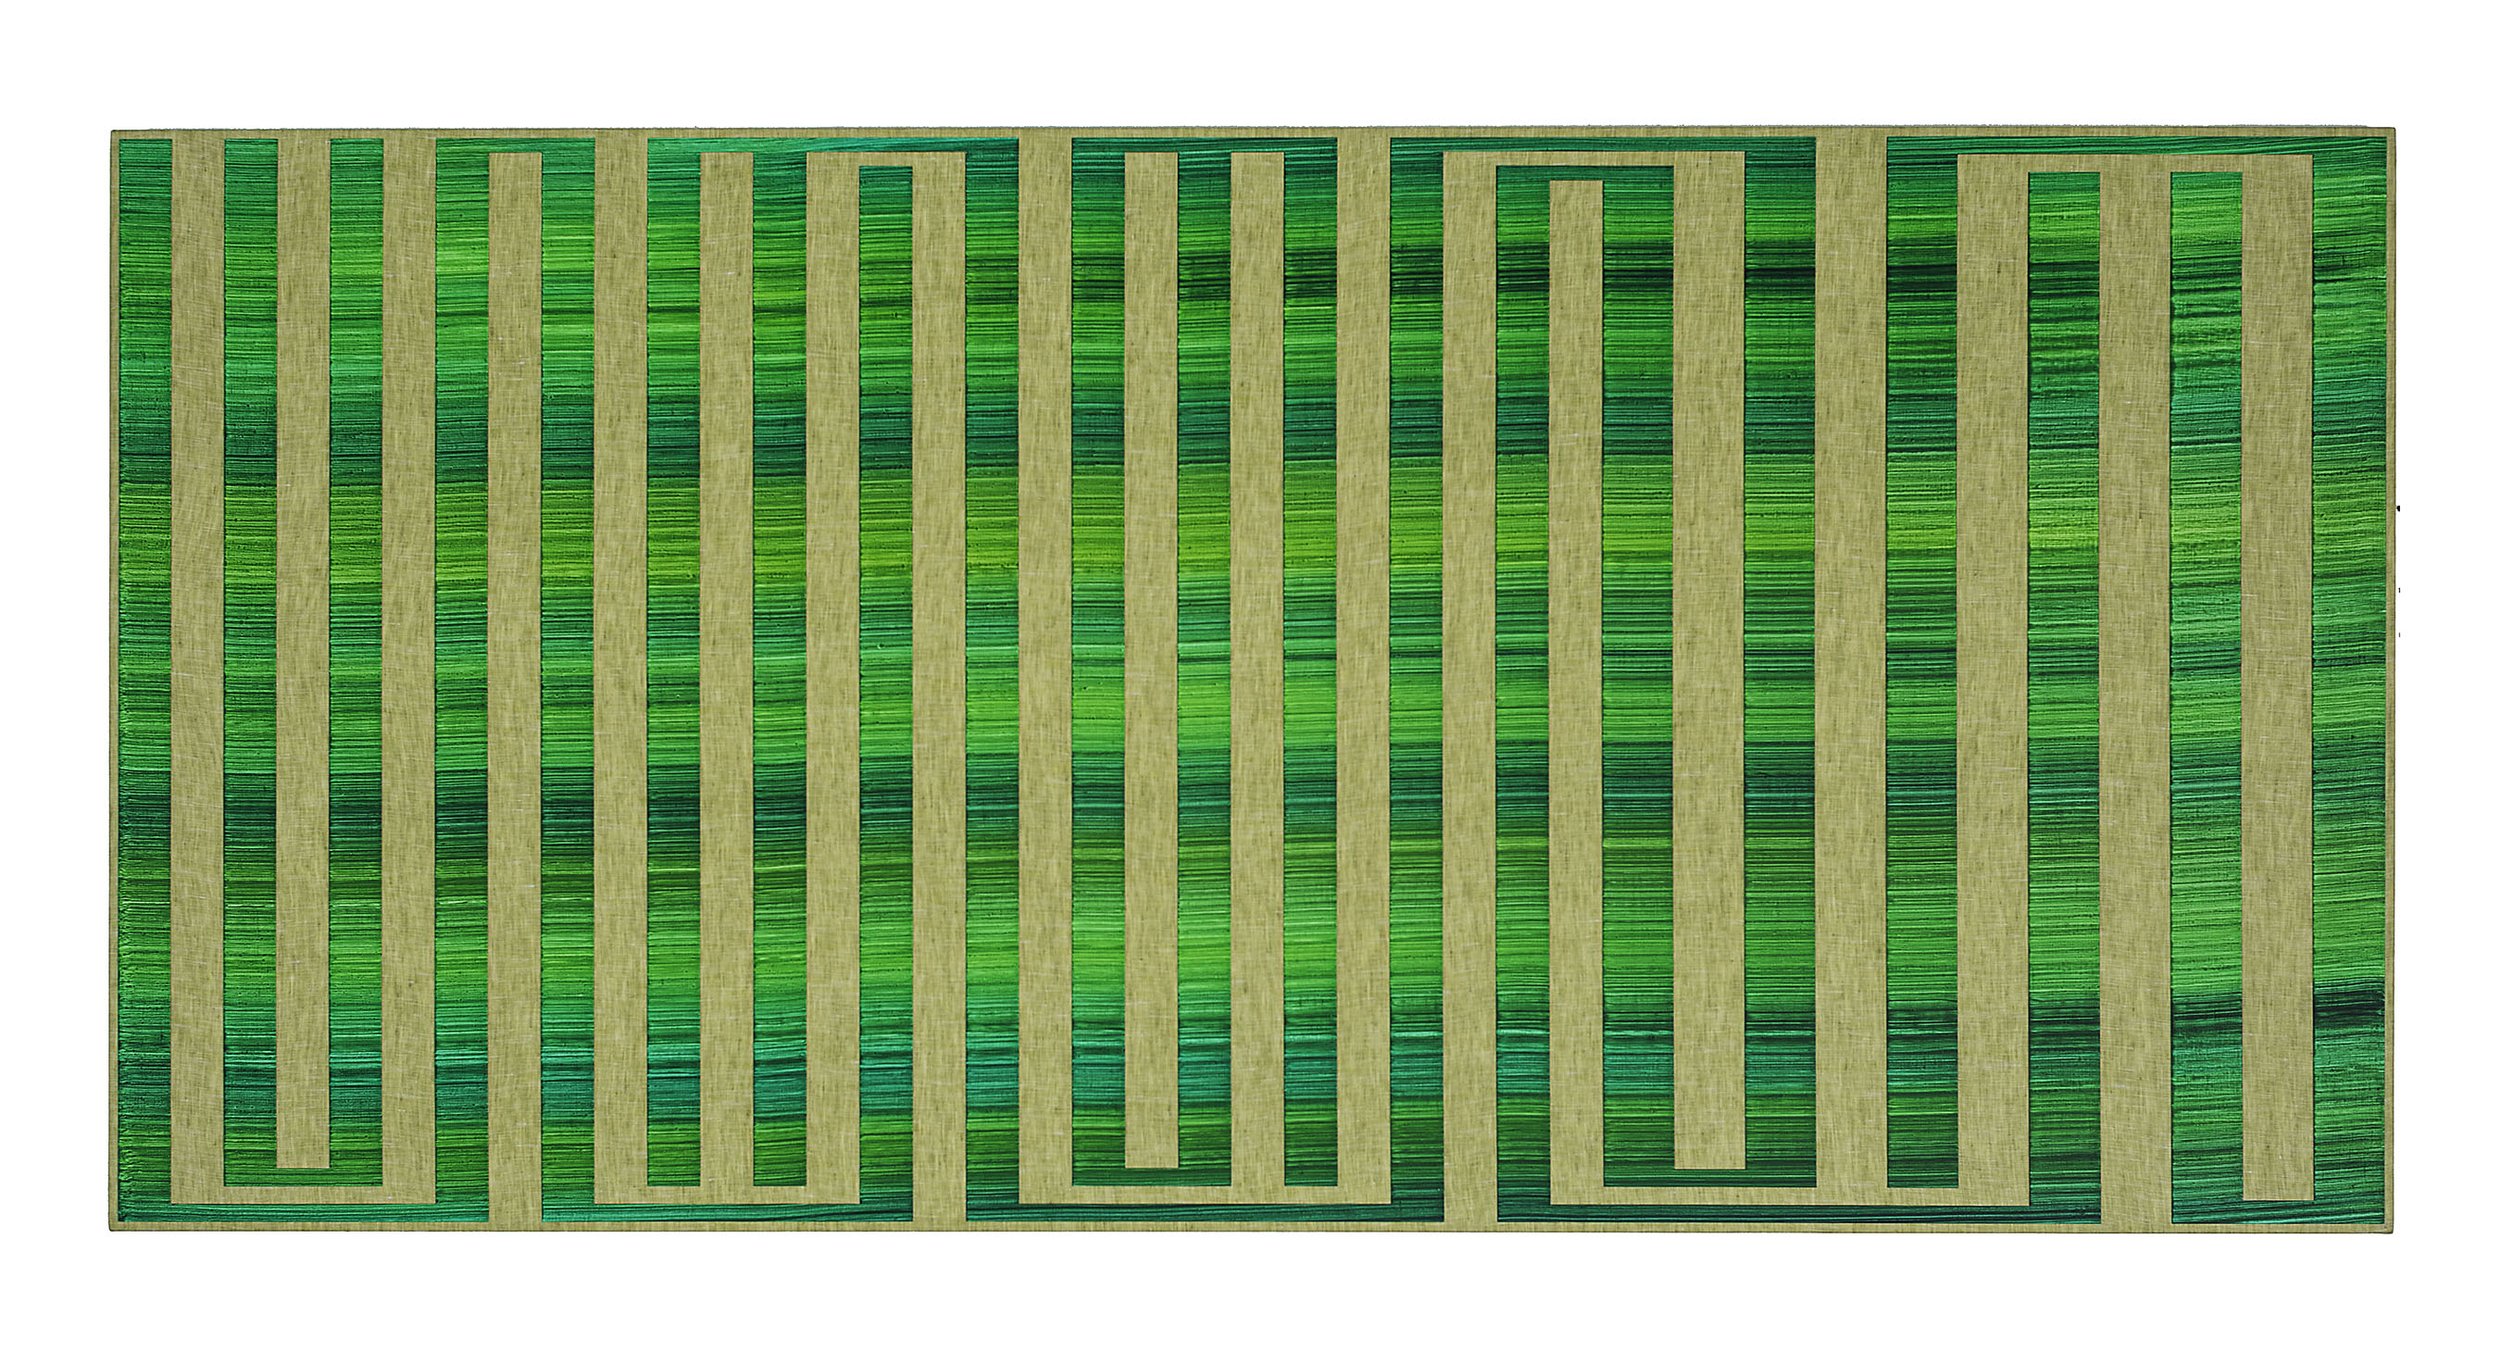 WISSAHICKON | 30 x 62 inches / 76.2 x 157.5 cm, acrylic on linen on panel, 2022